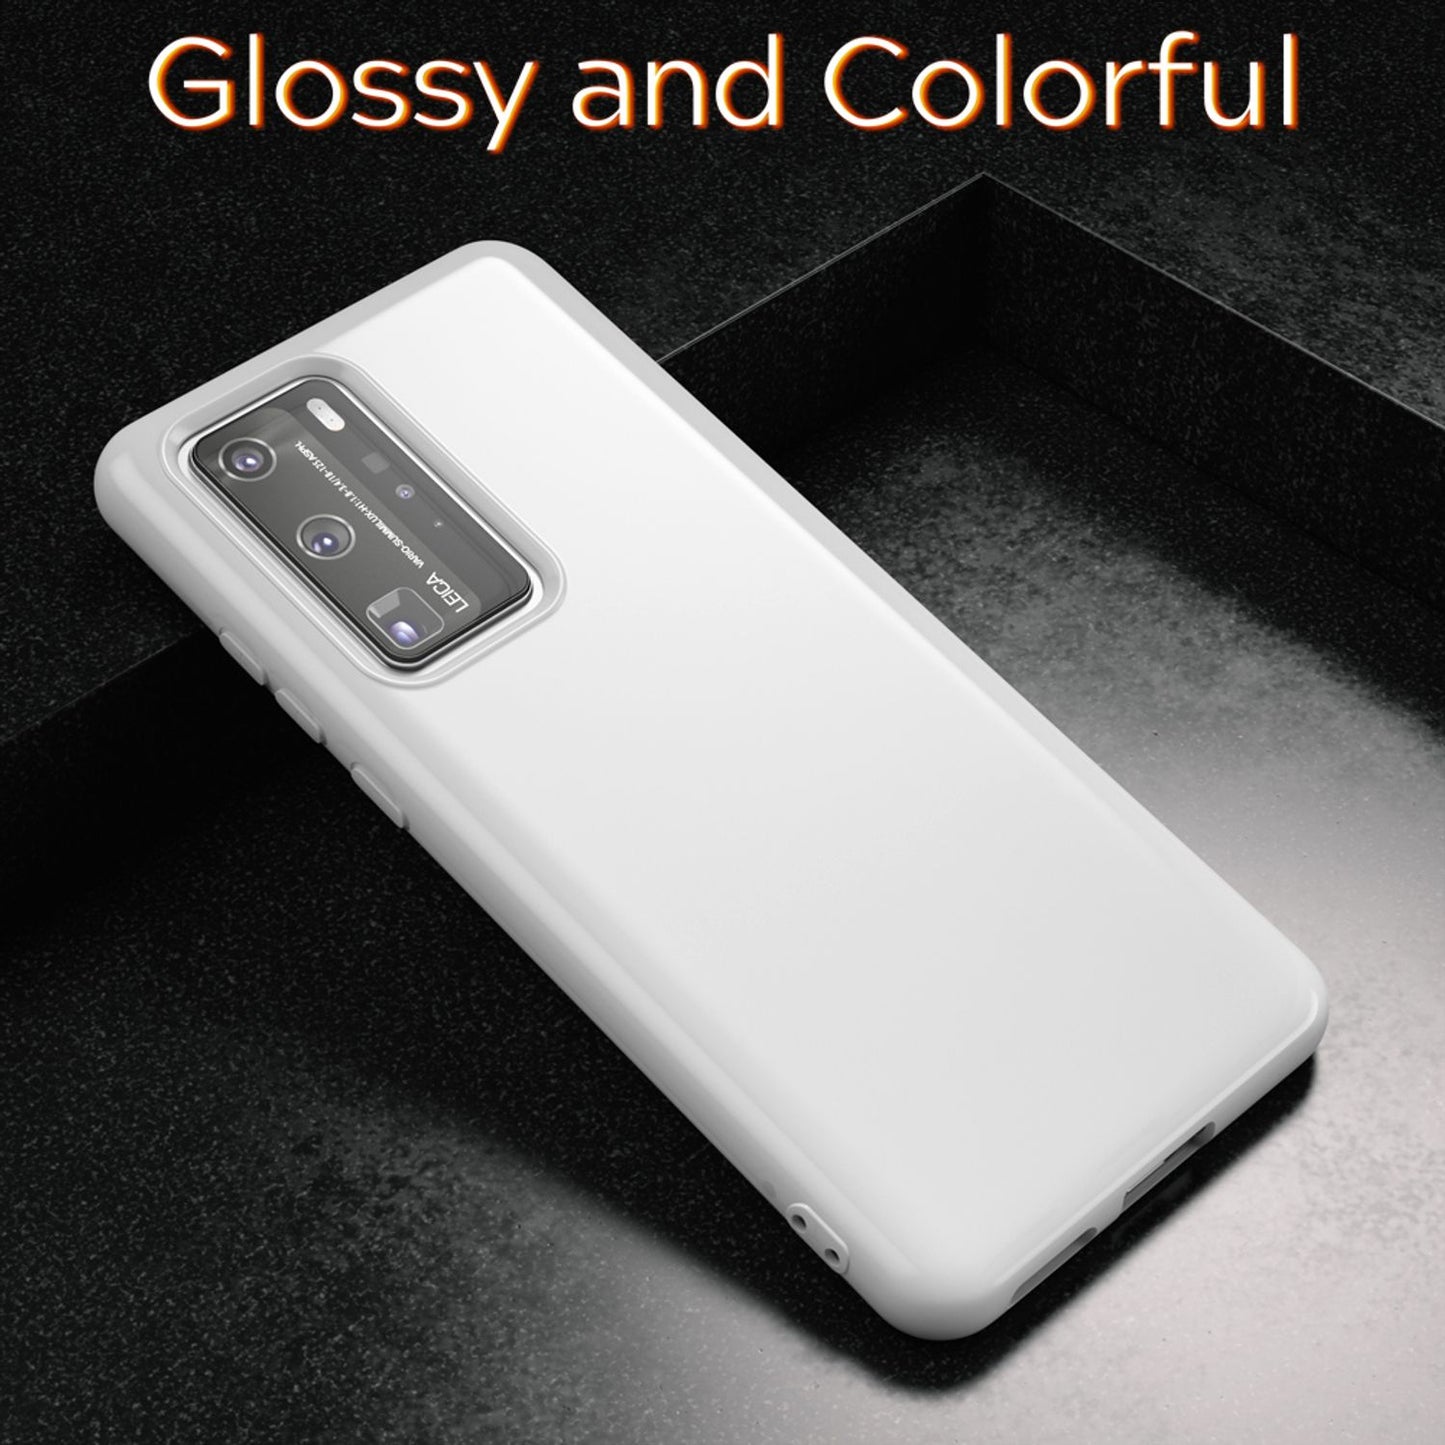 NALIA Handy Hülle für Huawei P40 Pro, Slim Case Silikon Schutzhülle Cover Bumper